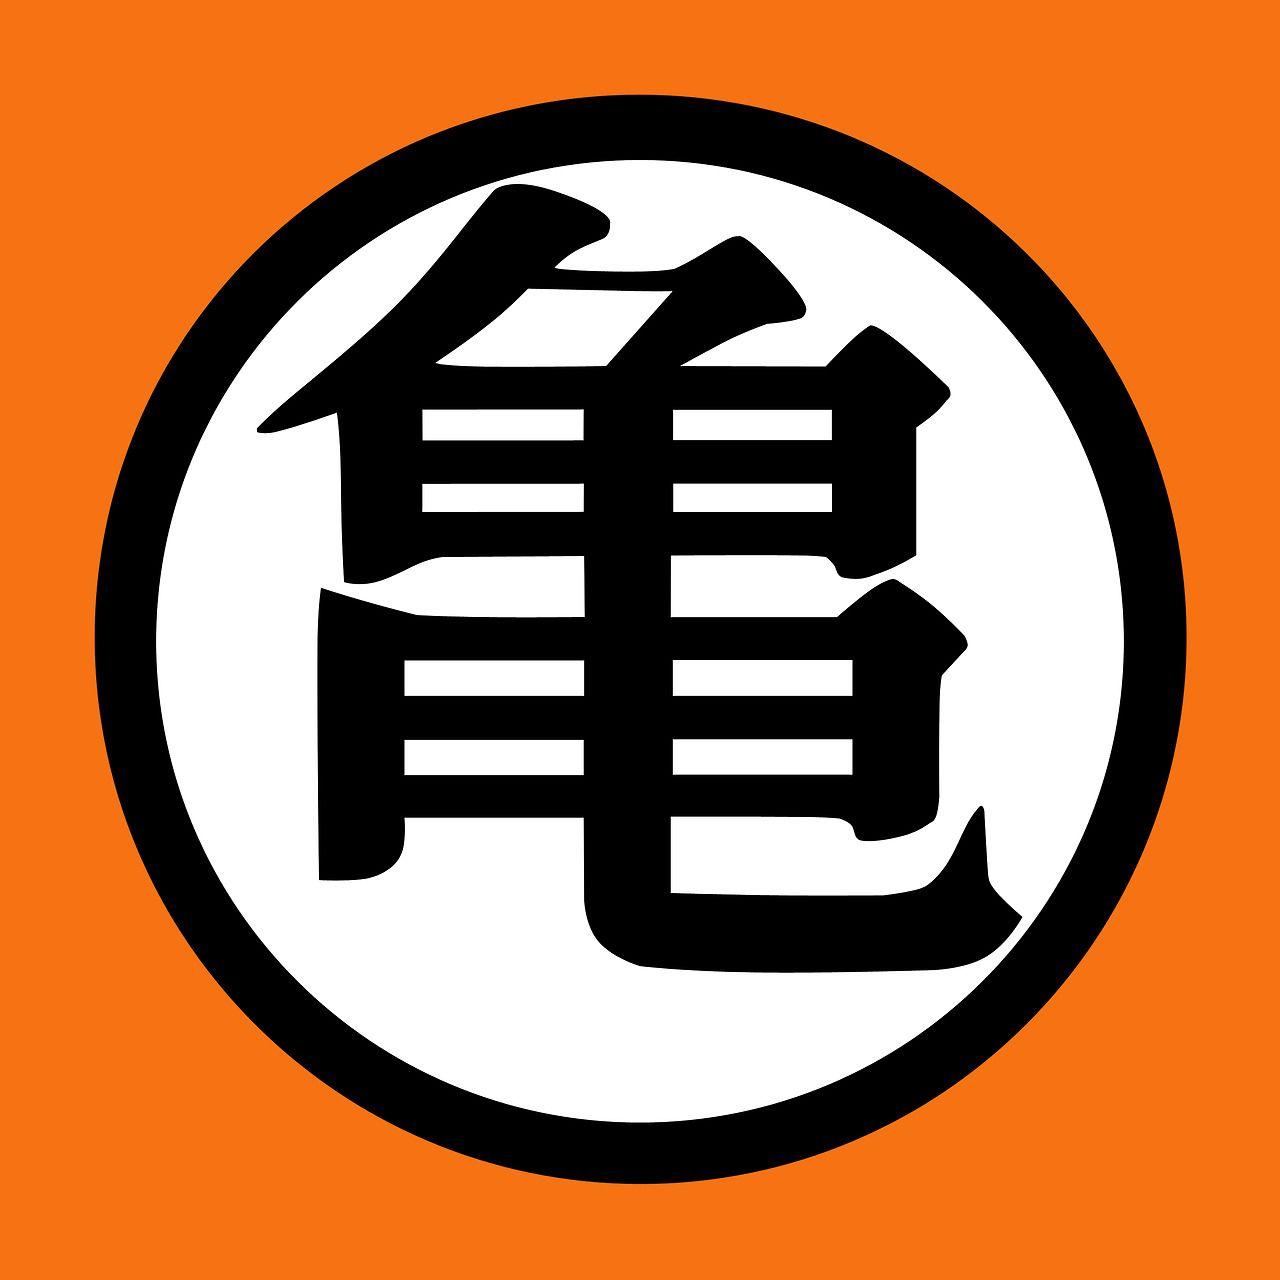 Kame Logo - Kame House emblema | Dj / Chris room | Goku, Logo dragon, Dbz